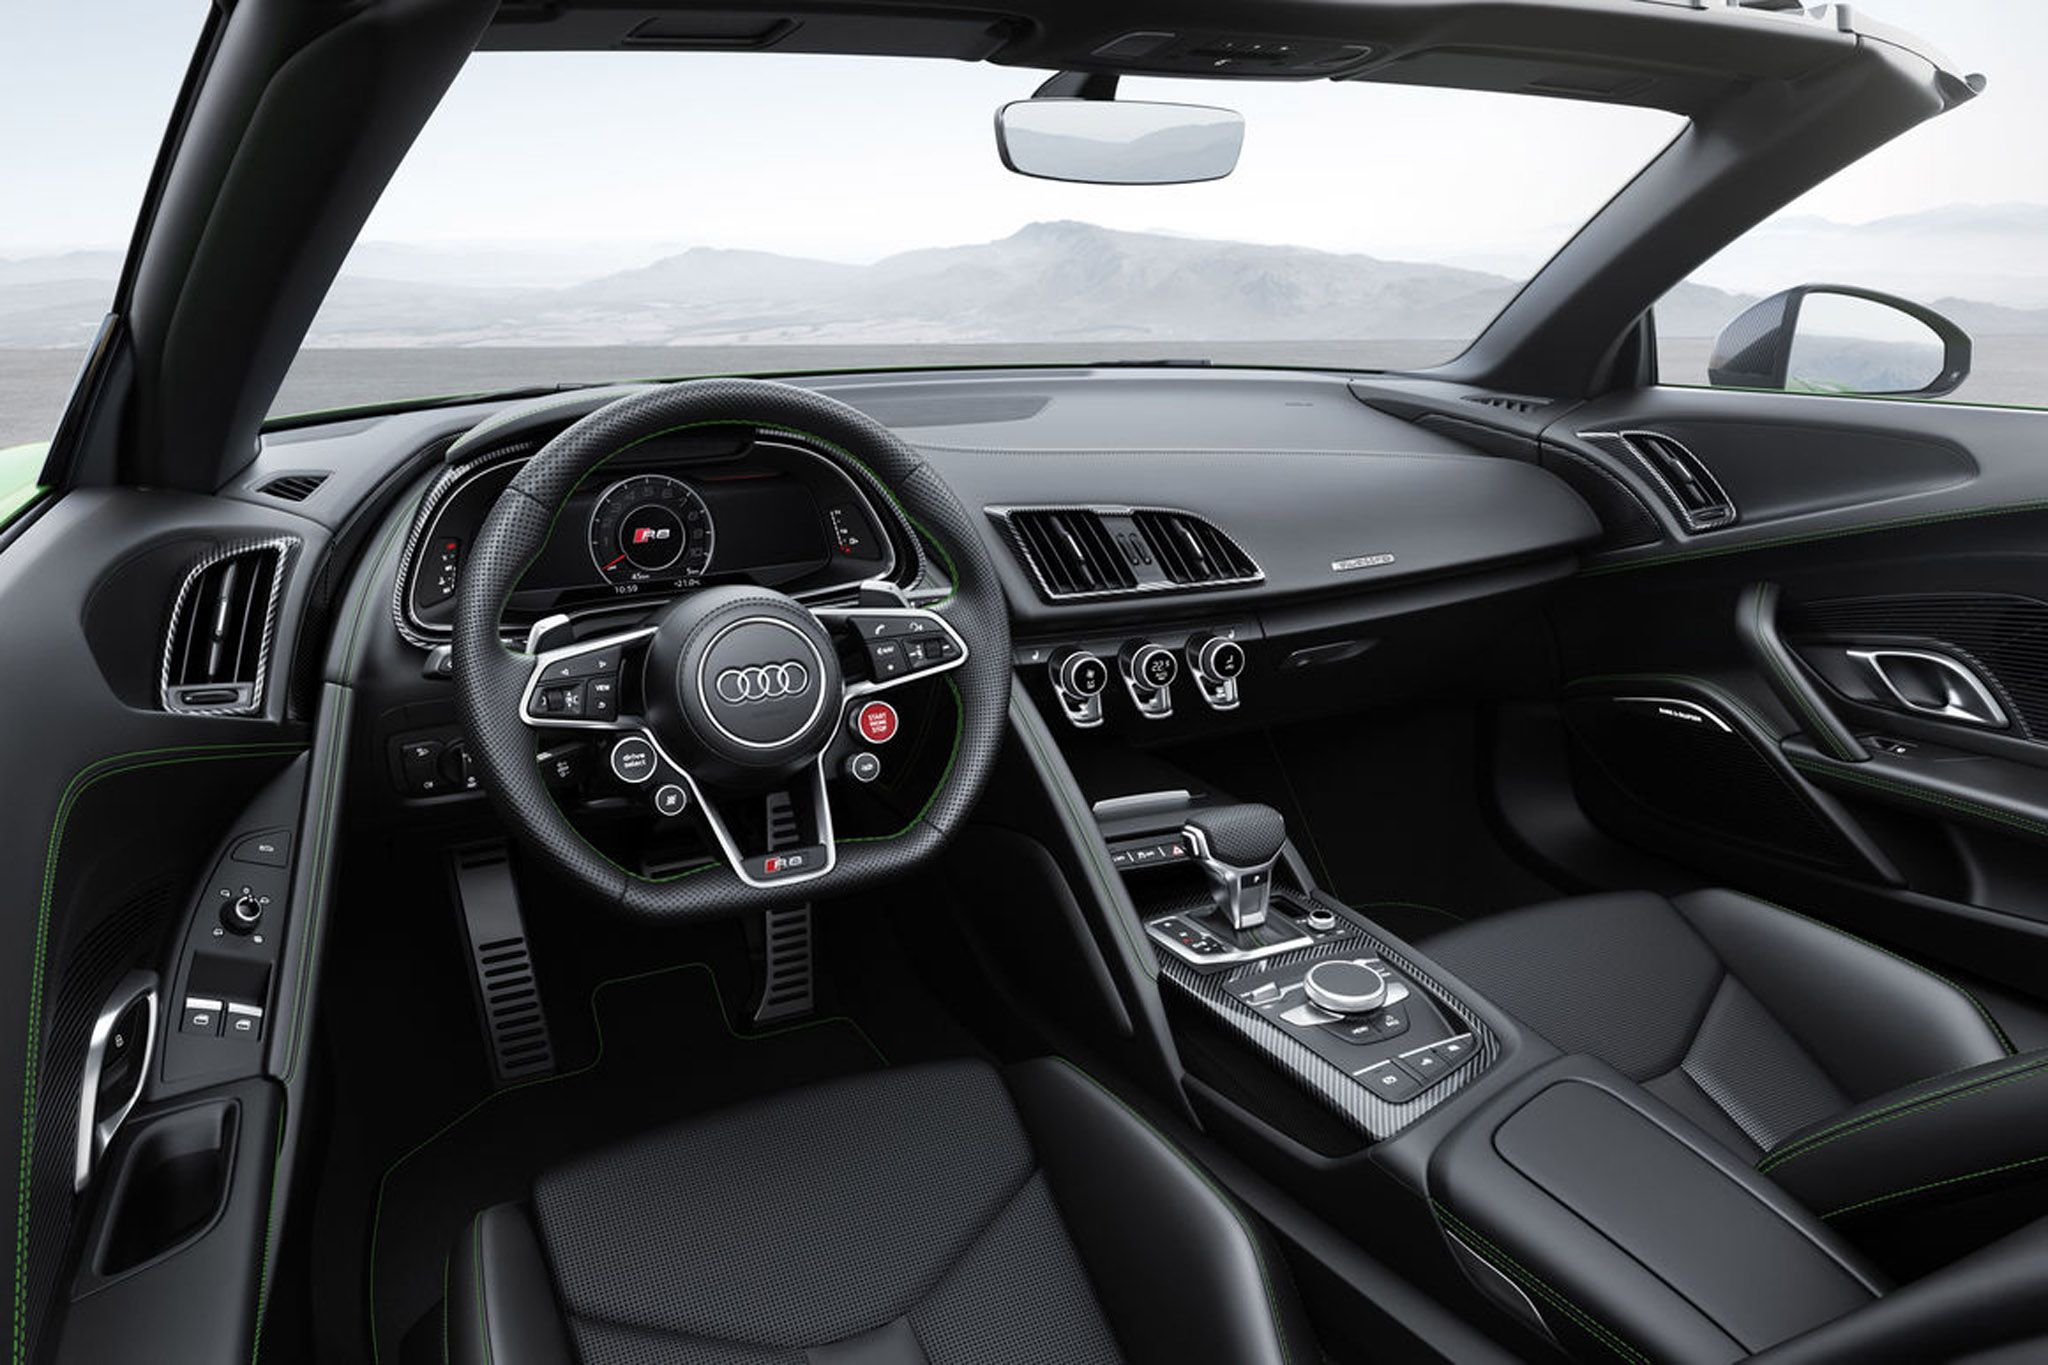 Audi R8 Spyder V10 Plus inside the cabin